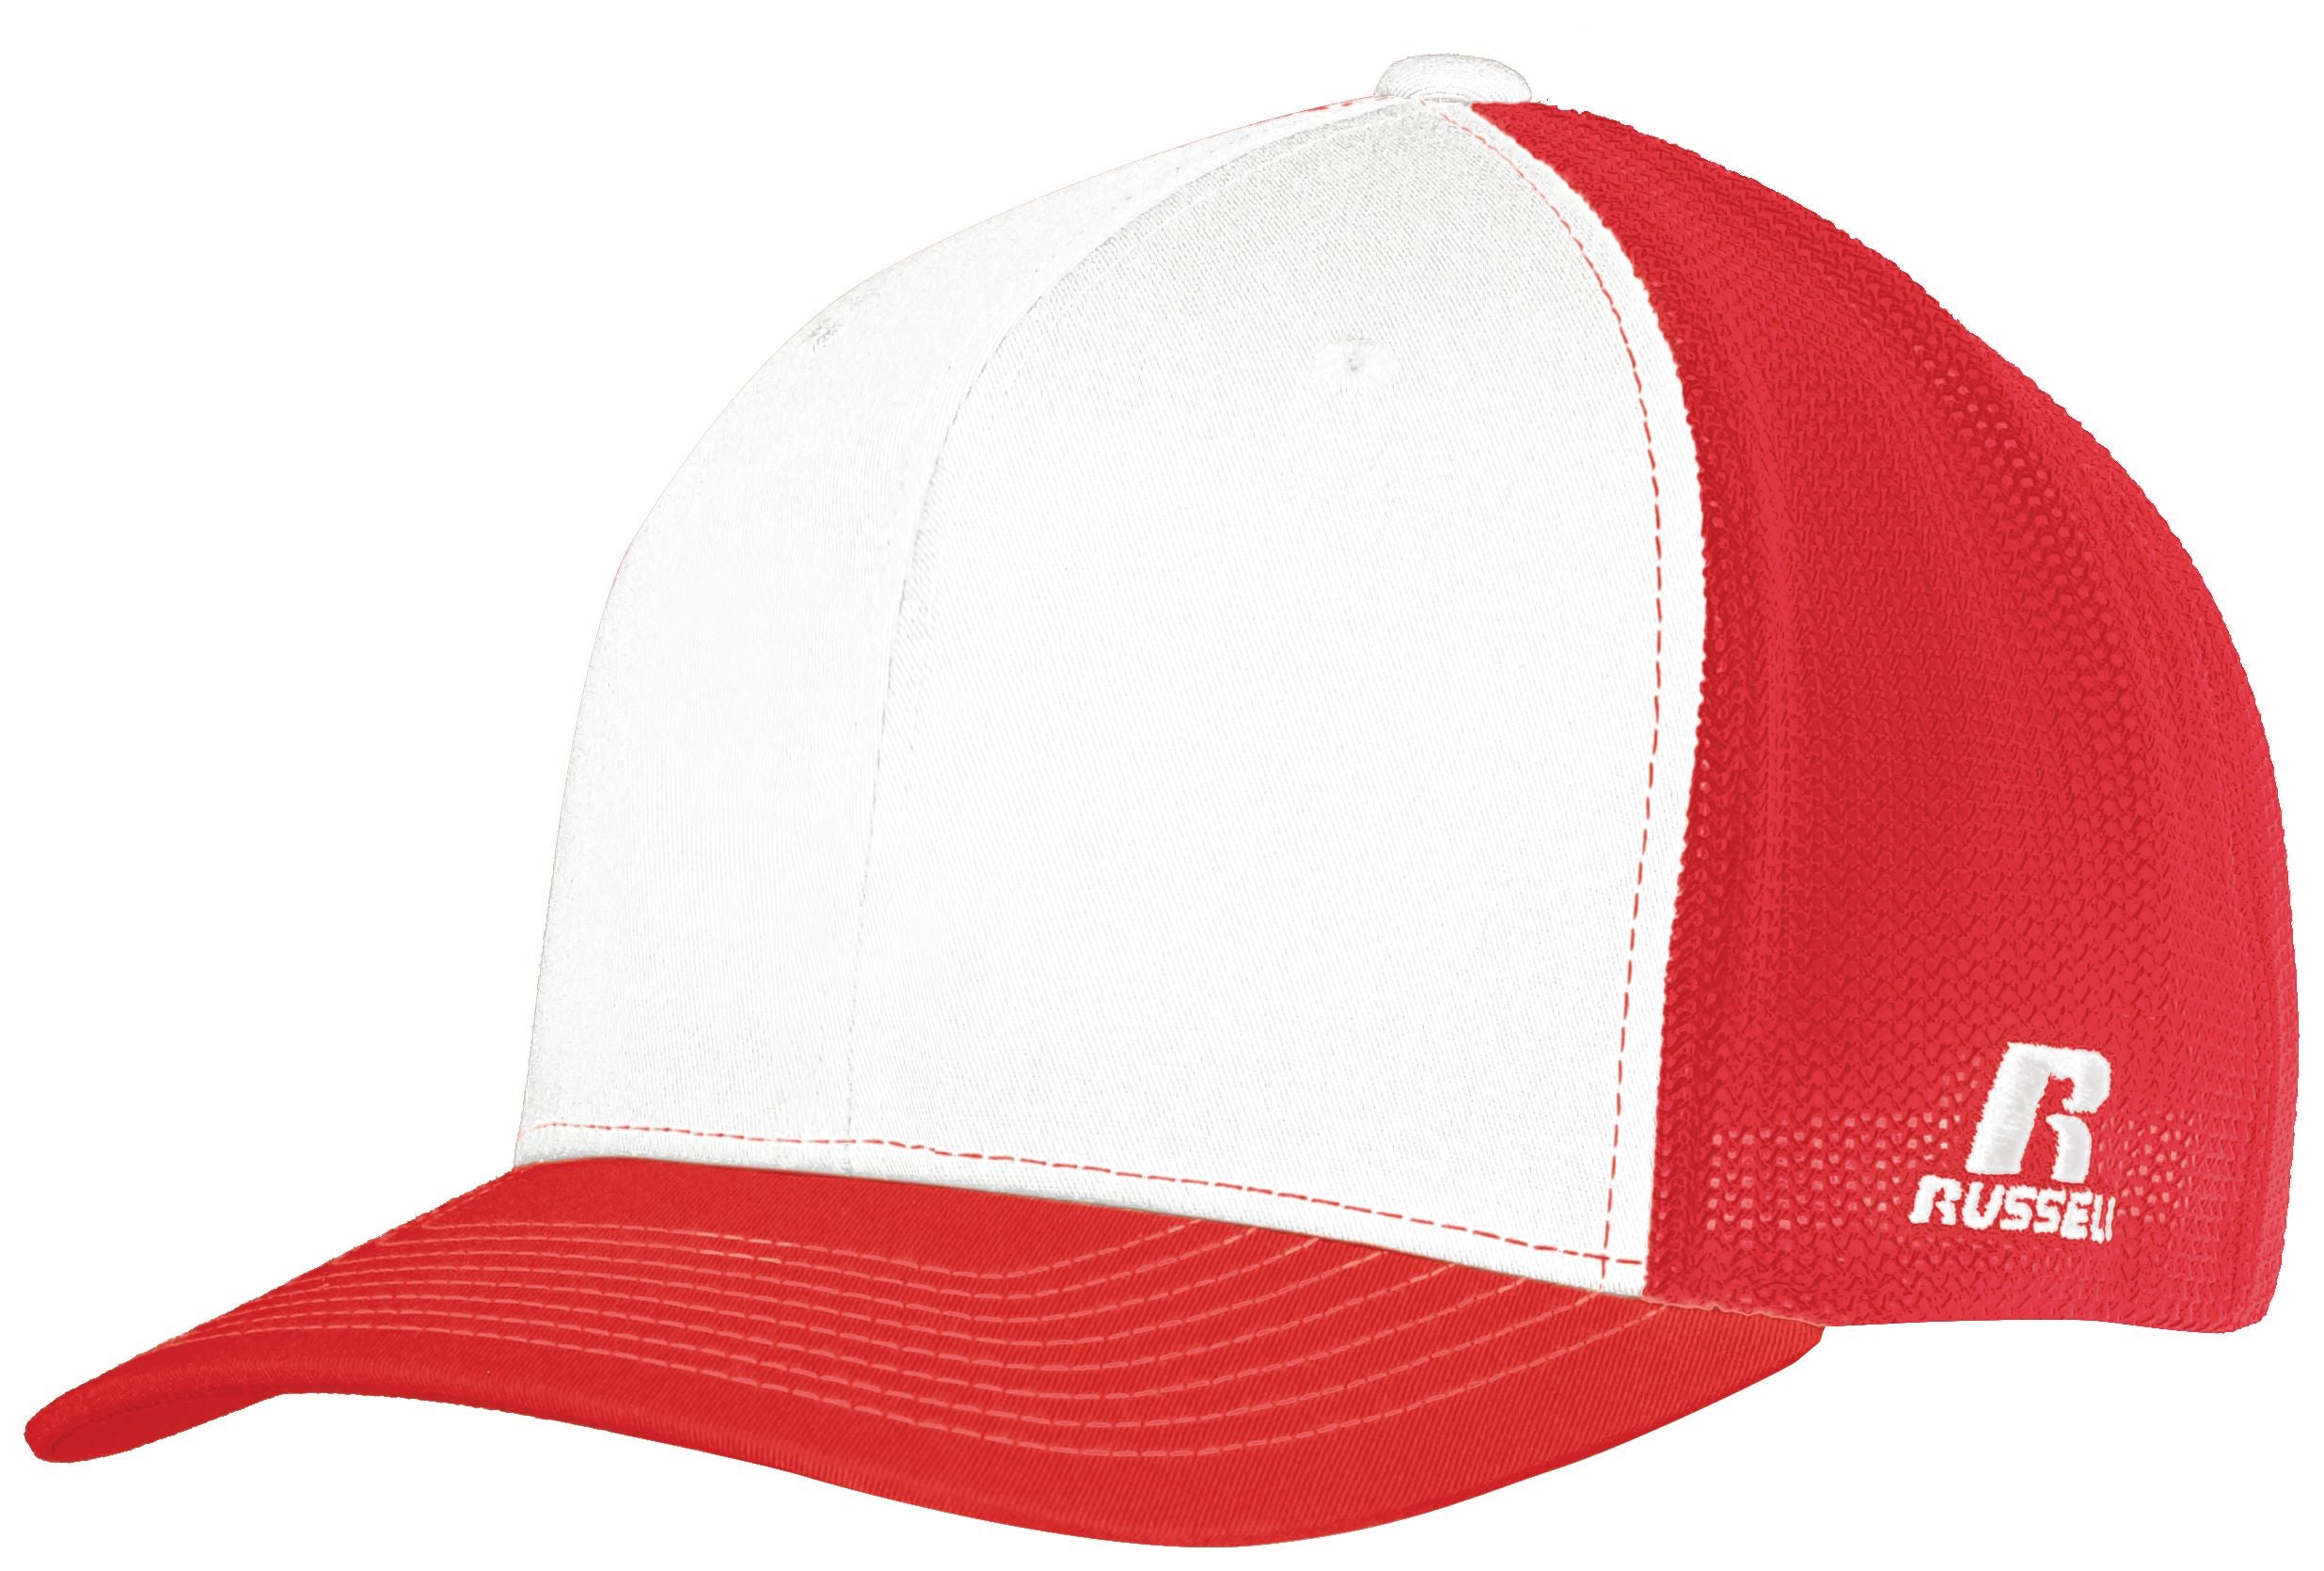 Russell Athletic Flexfit Twill Mesh Cap in White/True Red  -Part of the Adult, Headwear, Headwear-Cap, Russell-Athletic-Products product lines at KanaleyCreations.com